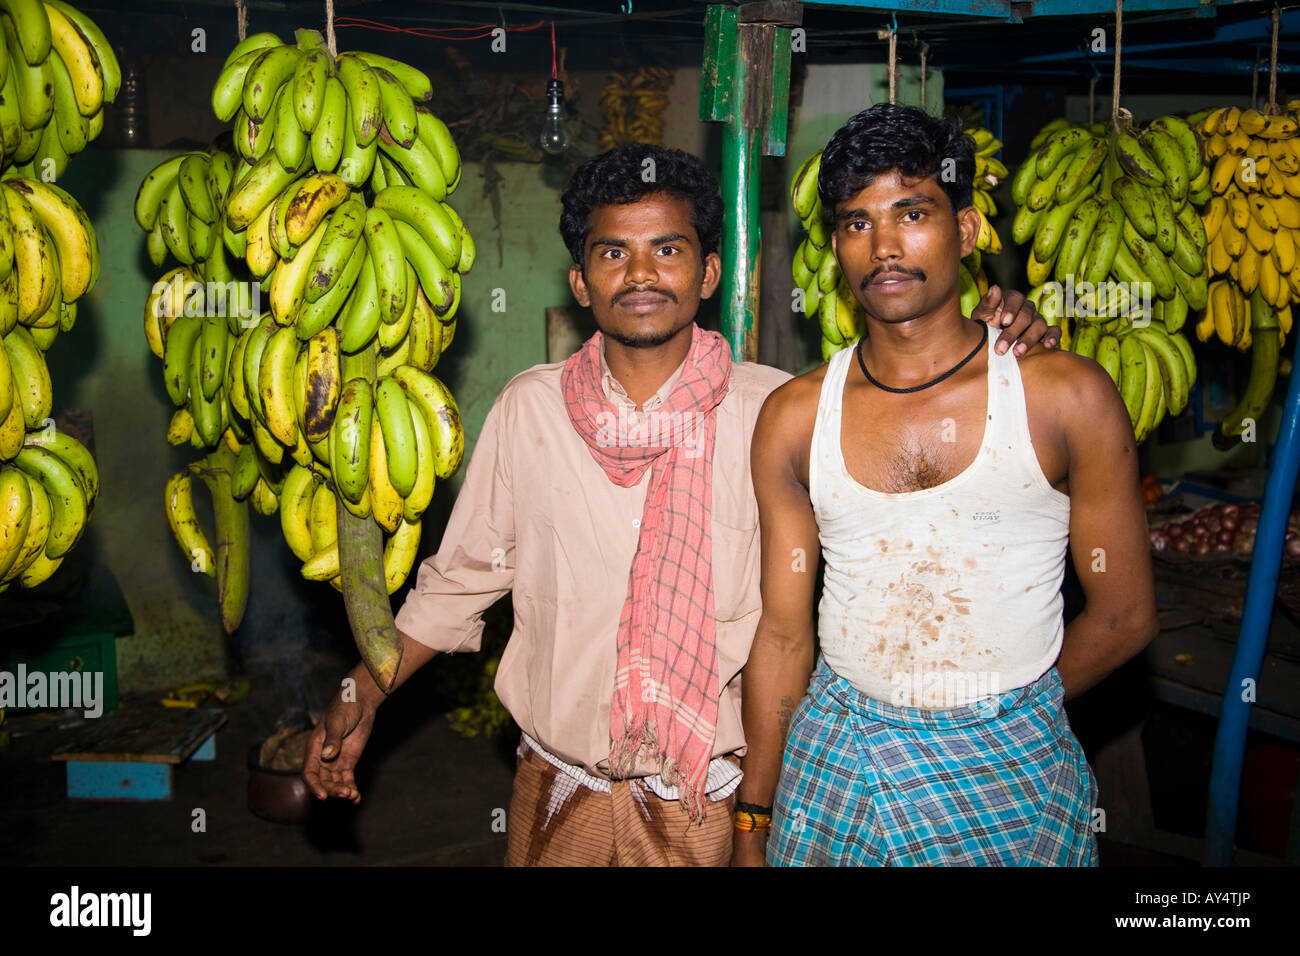 Two banana sellers in a street market, Madurai, Tamil Nadu, India Stock Photo